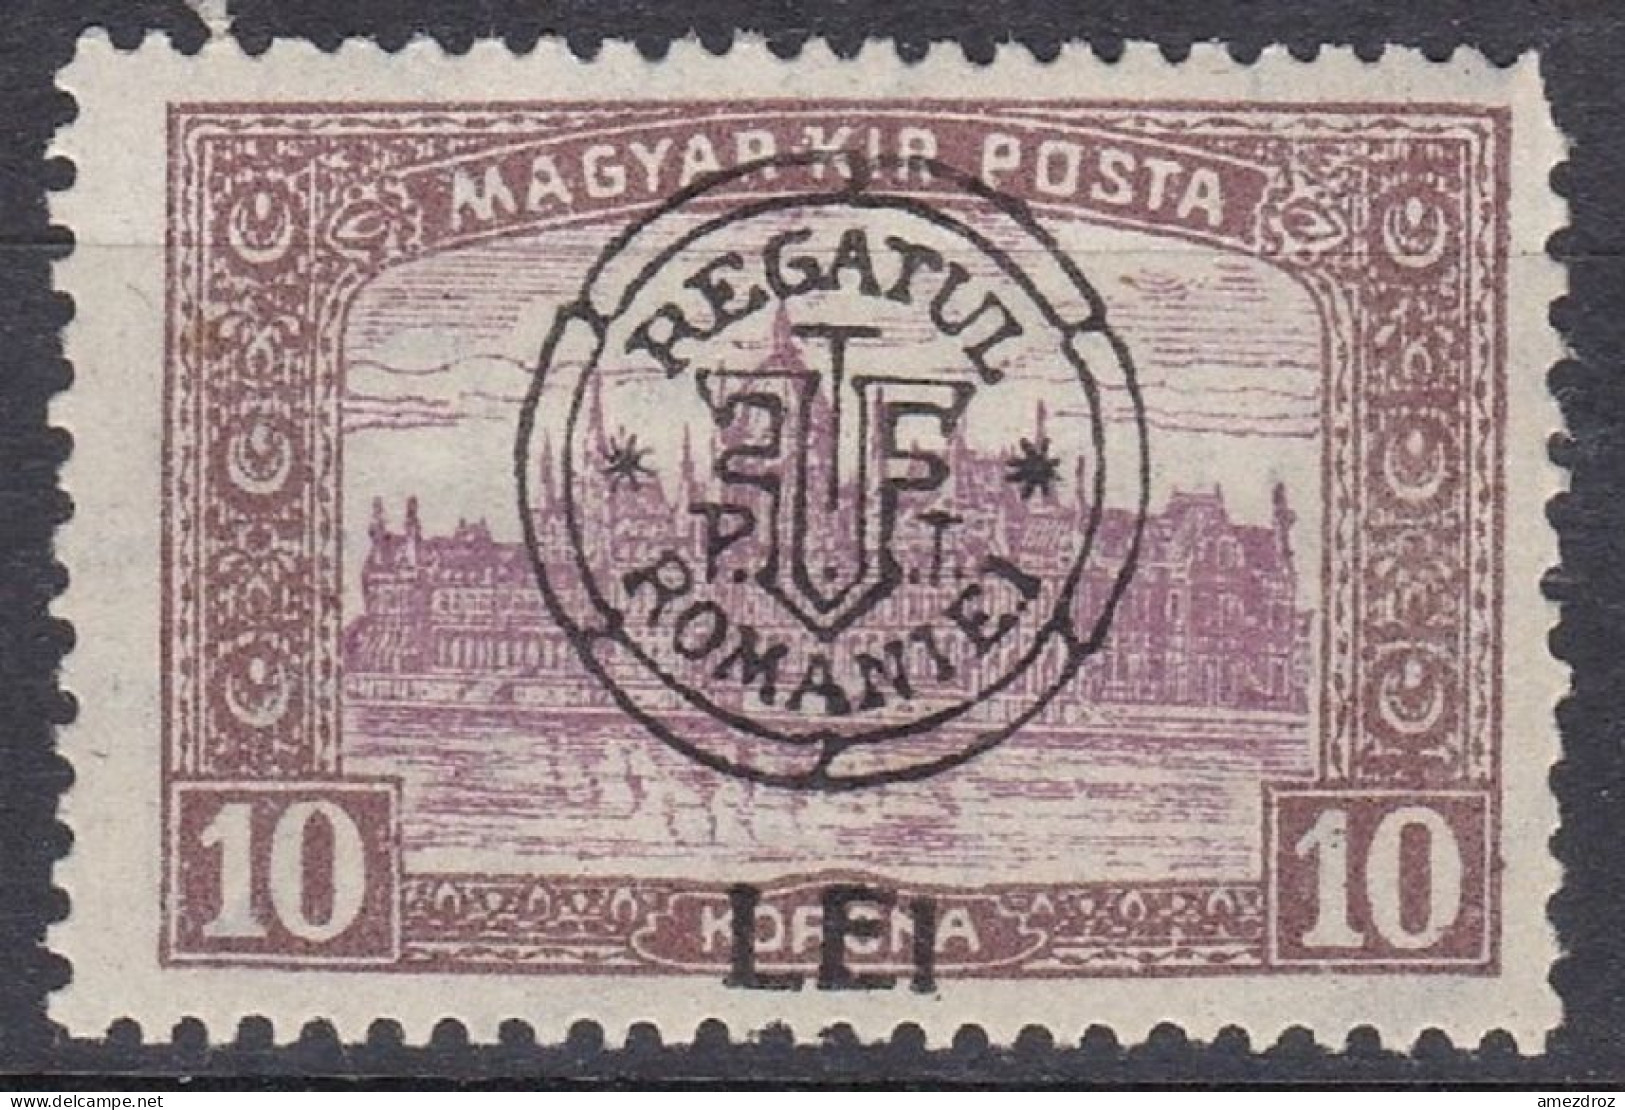 Transylvanie Cluj Kolozsvar 1919 N° 30 * (J22) - Siebenbürgen (Transsylvanien)